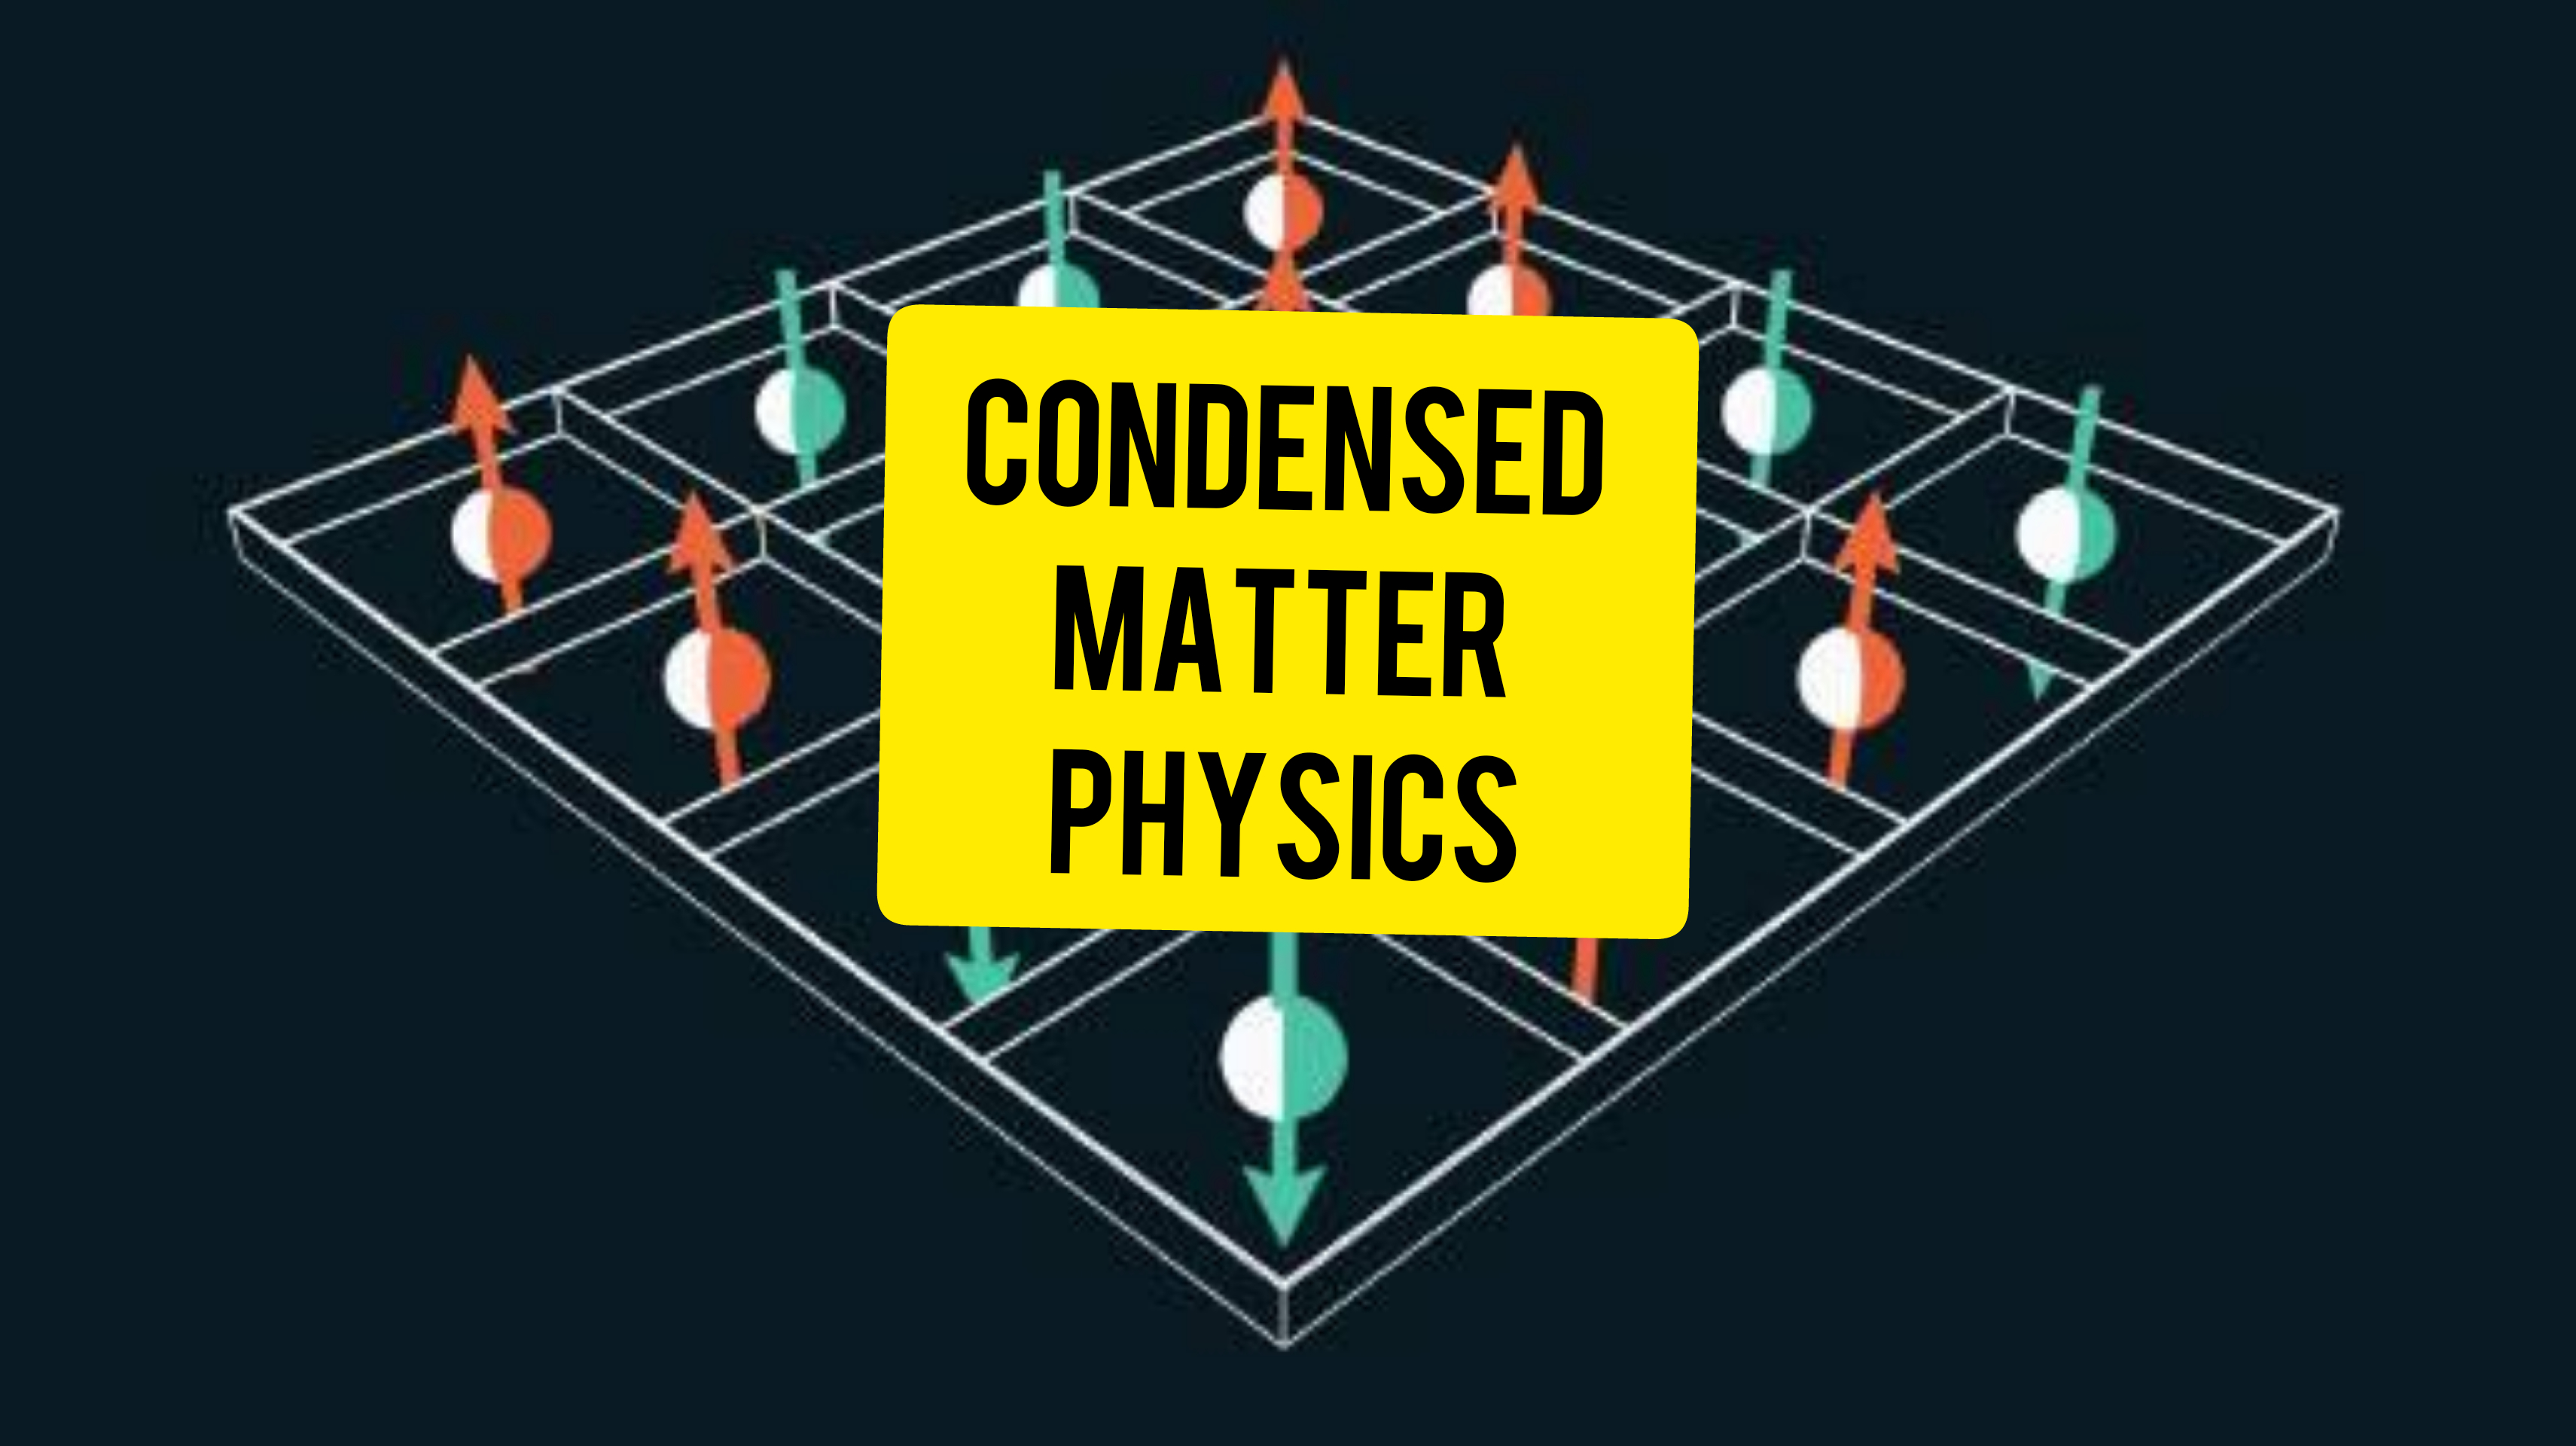 Condensed Matter Physics - I